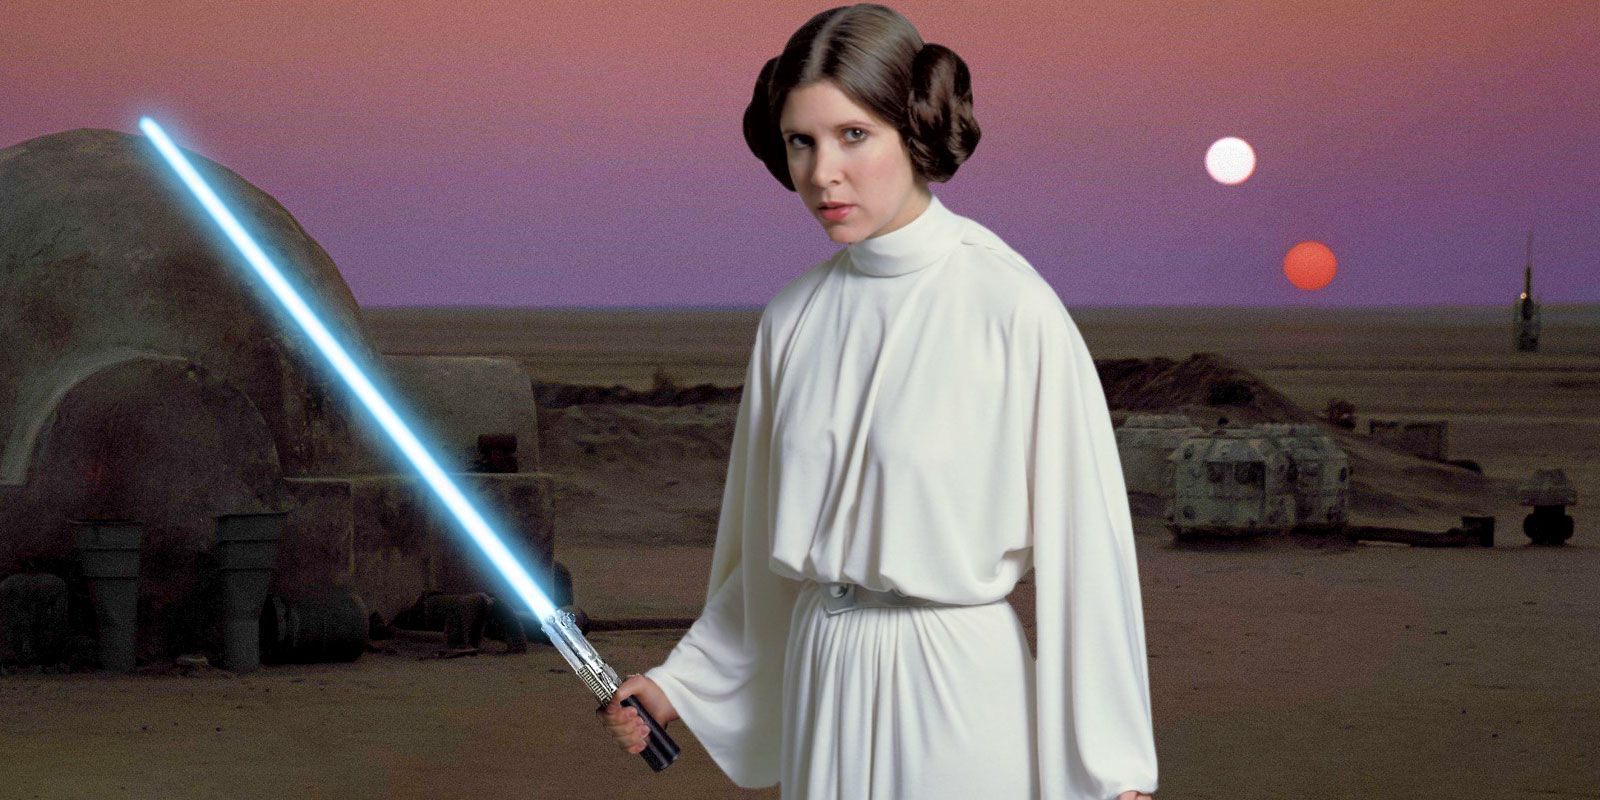 Leia Skywalker on Tatooine, wielding a lightsaber.